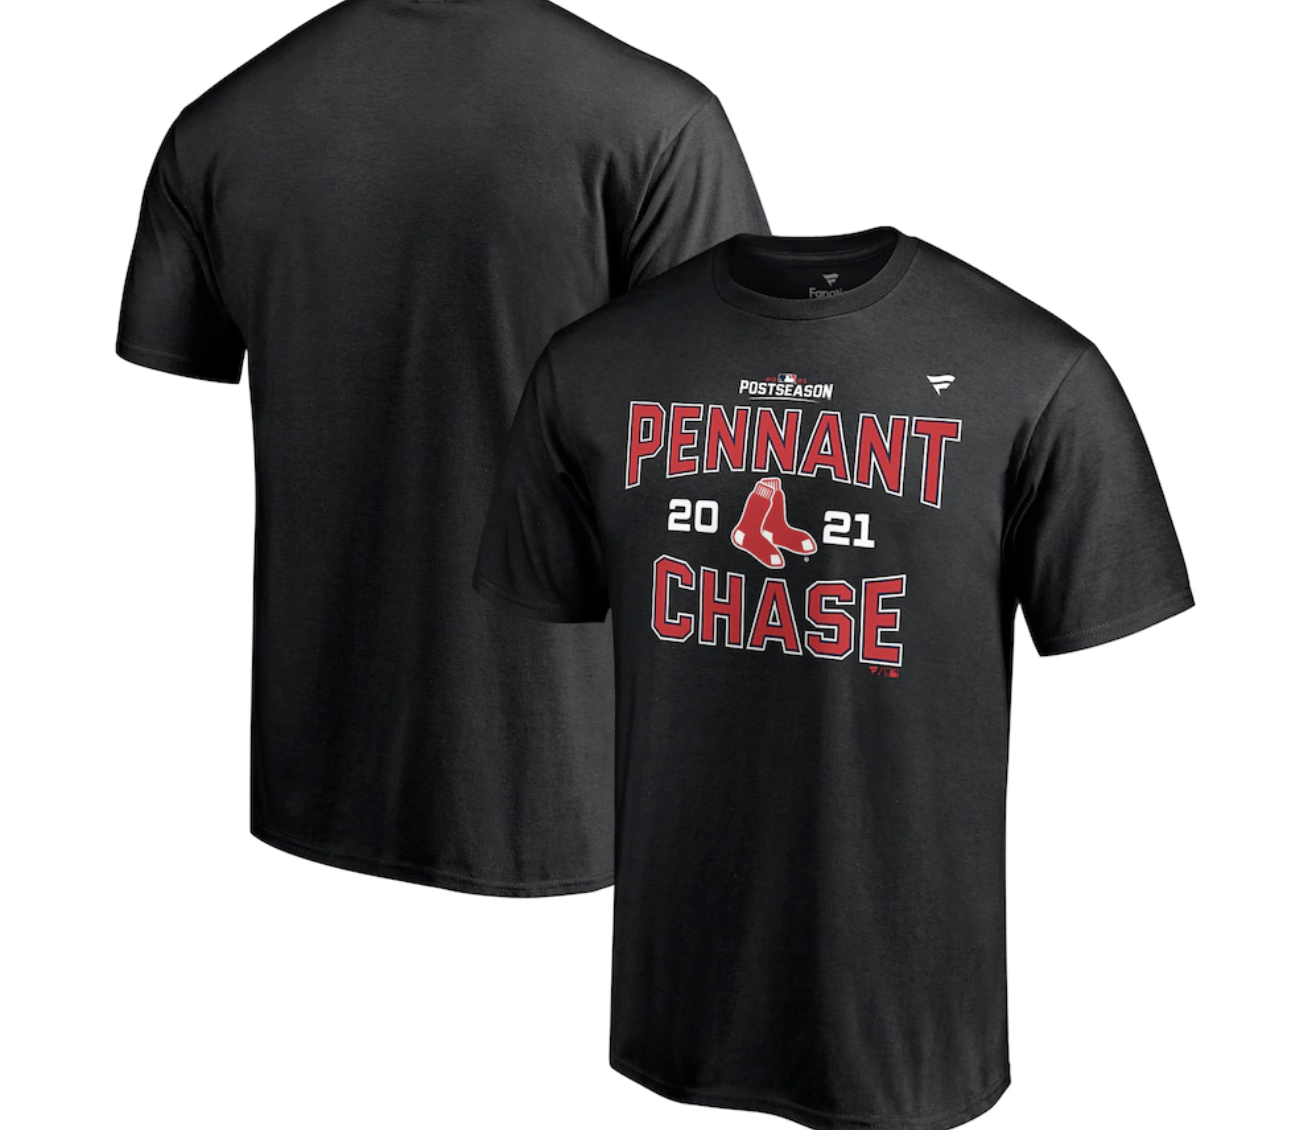 Atlanta Braves 2021 Pennant Chase Shirt Size XL Baseball MLB Fanatics